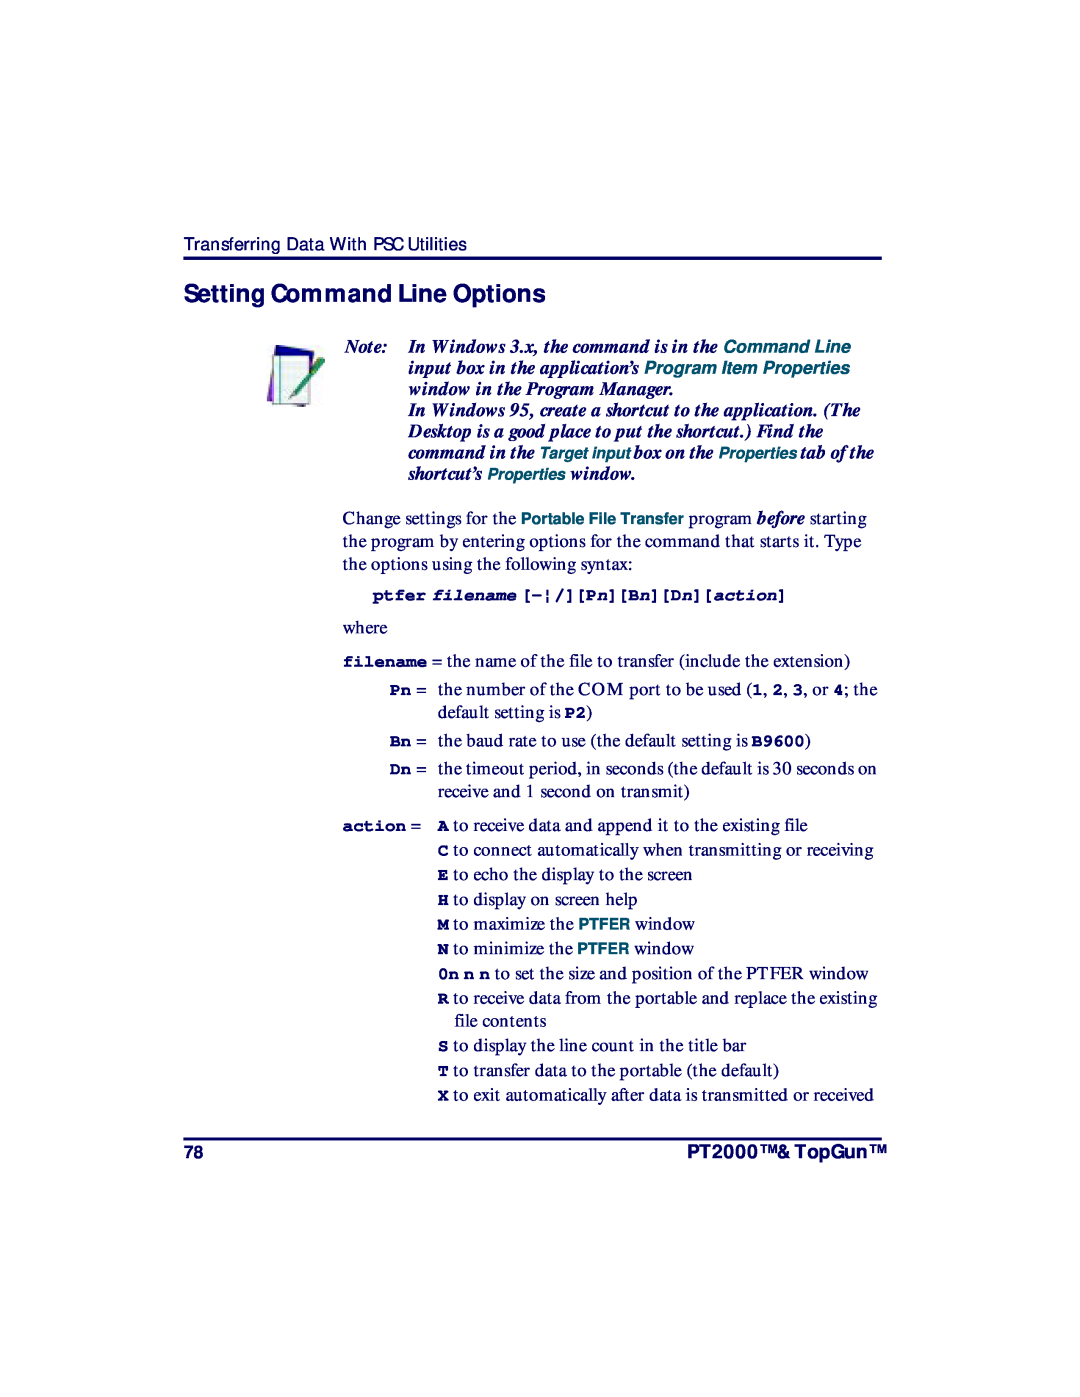 PSC TopGun, PT2000 manual Setting Command Line Options, ptferfilename-/PnBnDnaction 